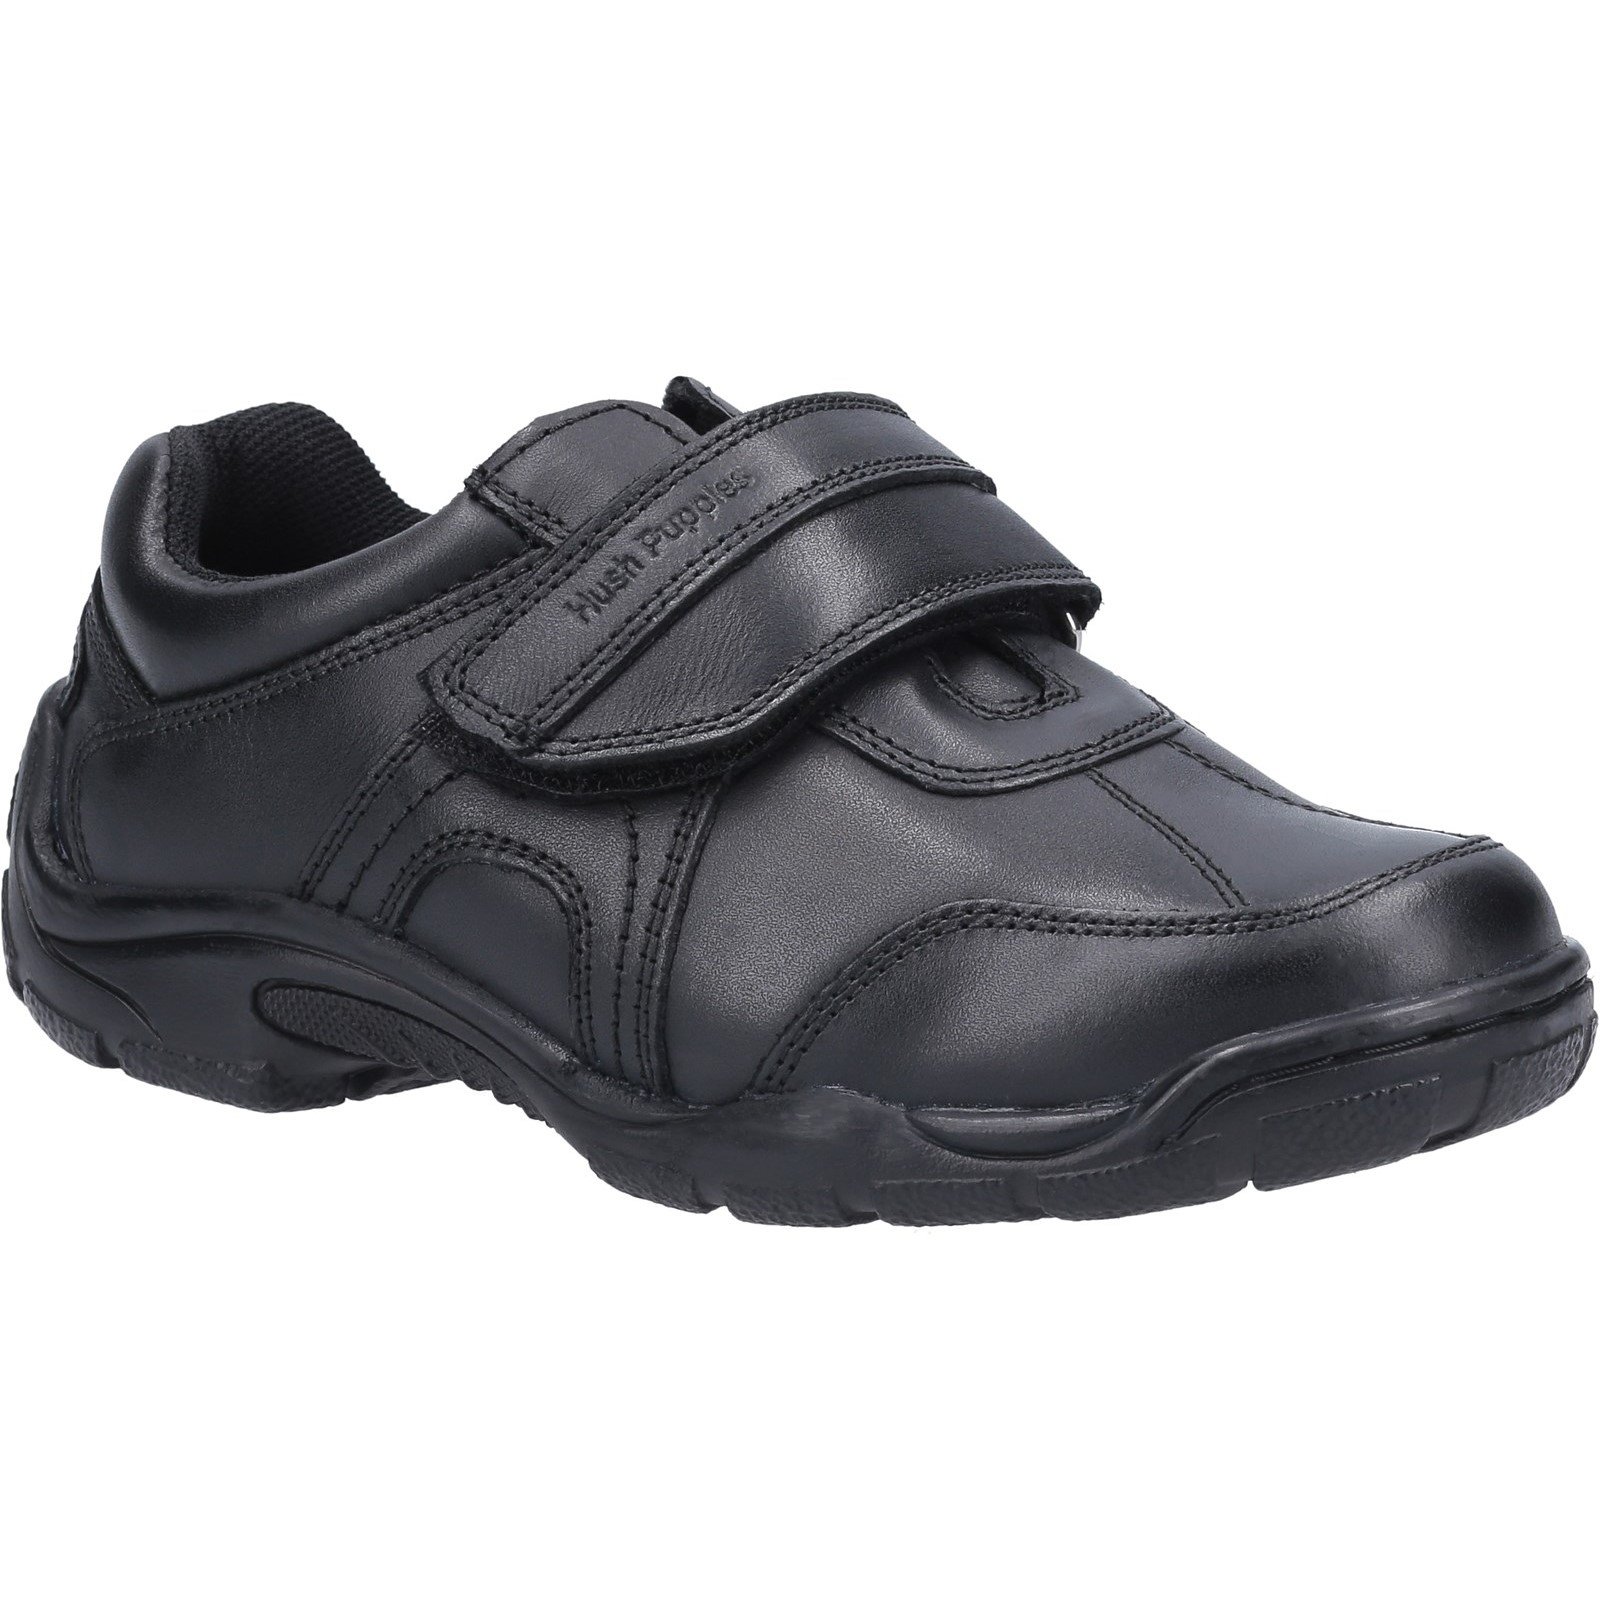 Hush Puppies Kid's Arlo Junior School Shoe Black 30853 - Black 2.5